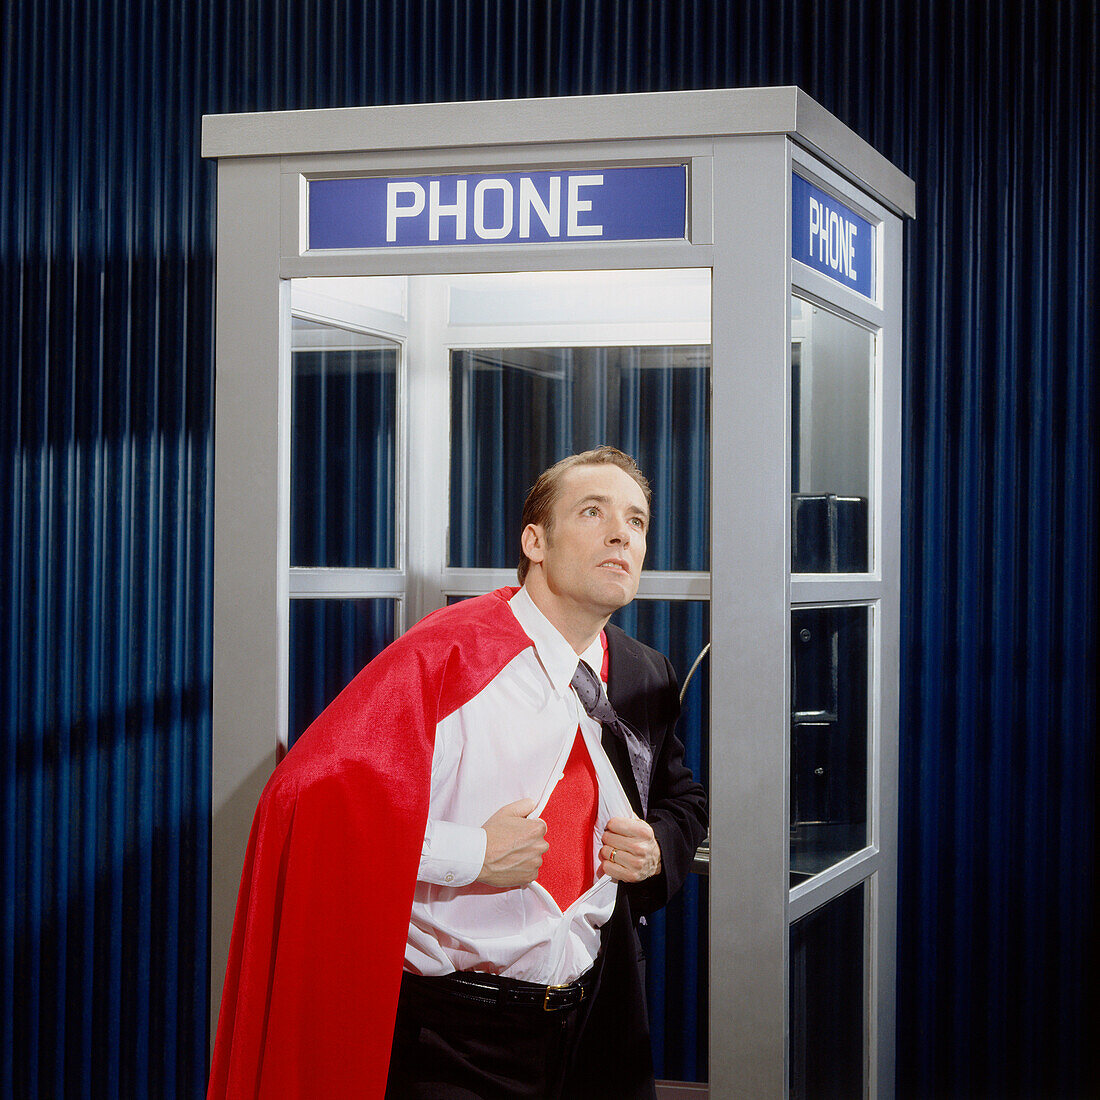 Mann öffnet Hemd, um Superheldenkostüm in Telefonzelle zu enthüllen